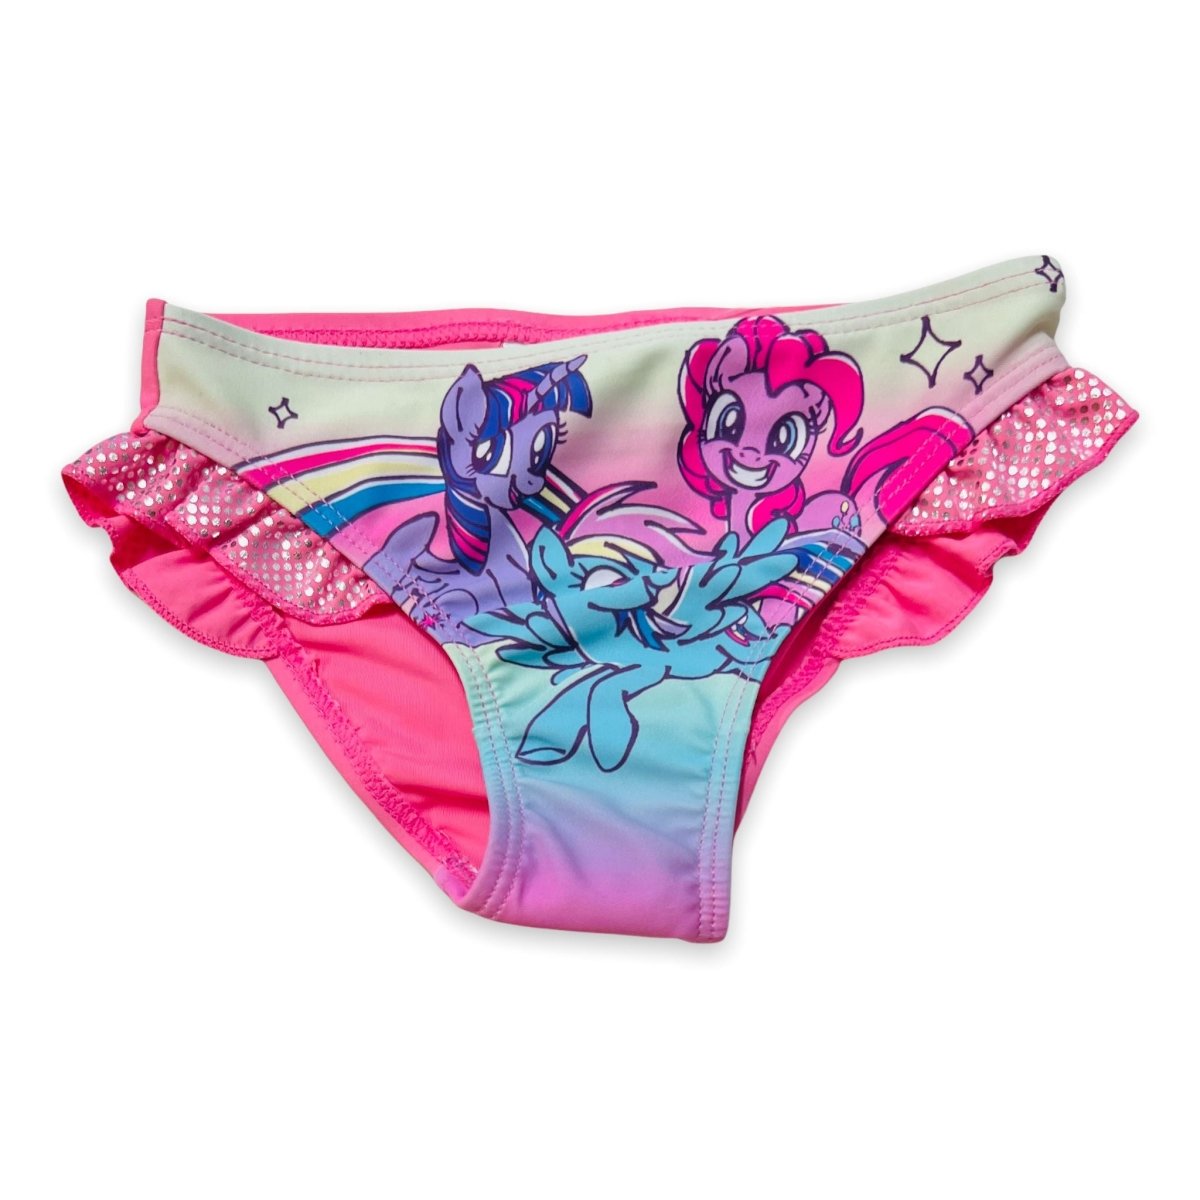 Costume Slip da Bagno Little Pony - Mstore016 - Costume da Bagno Bimba - Little Pony